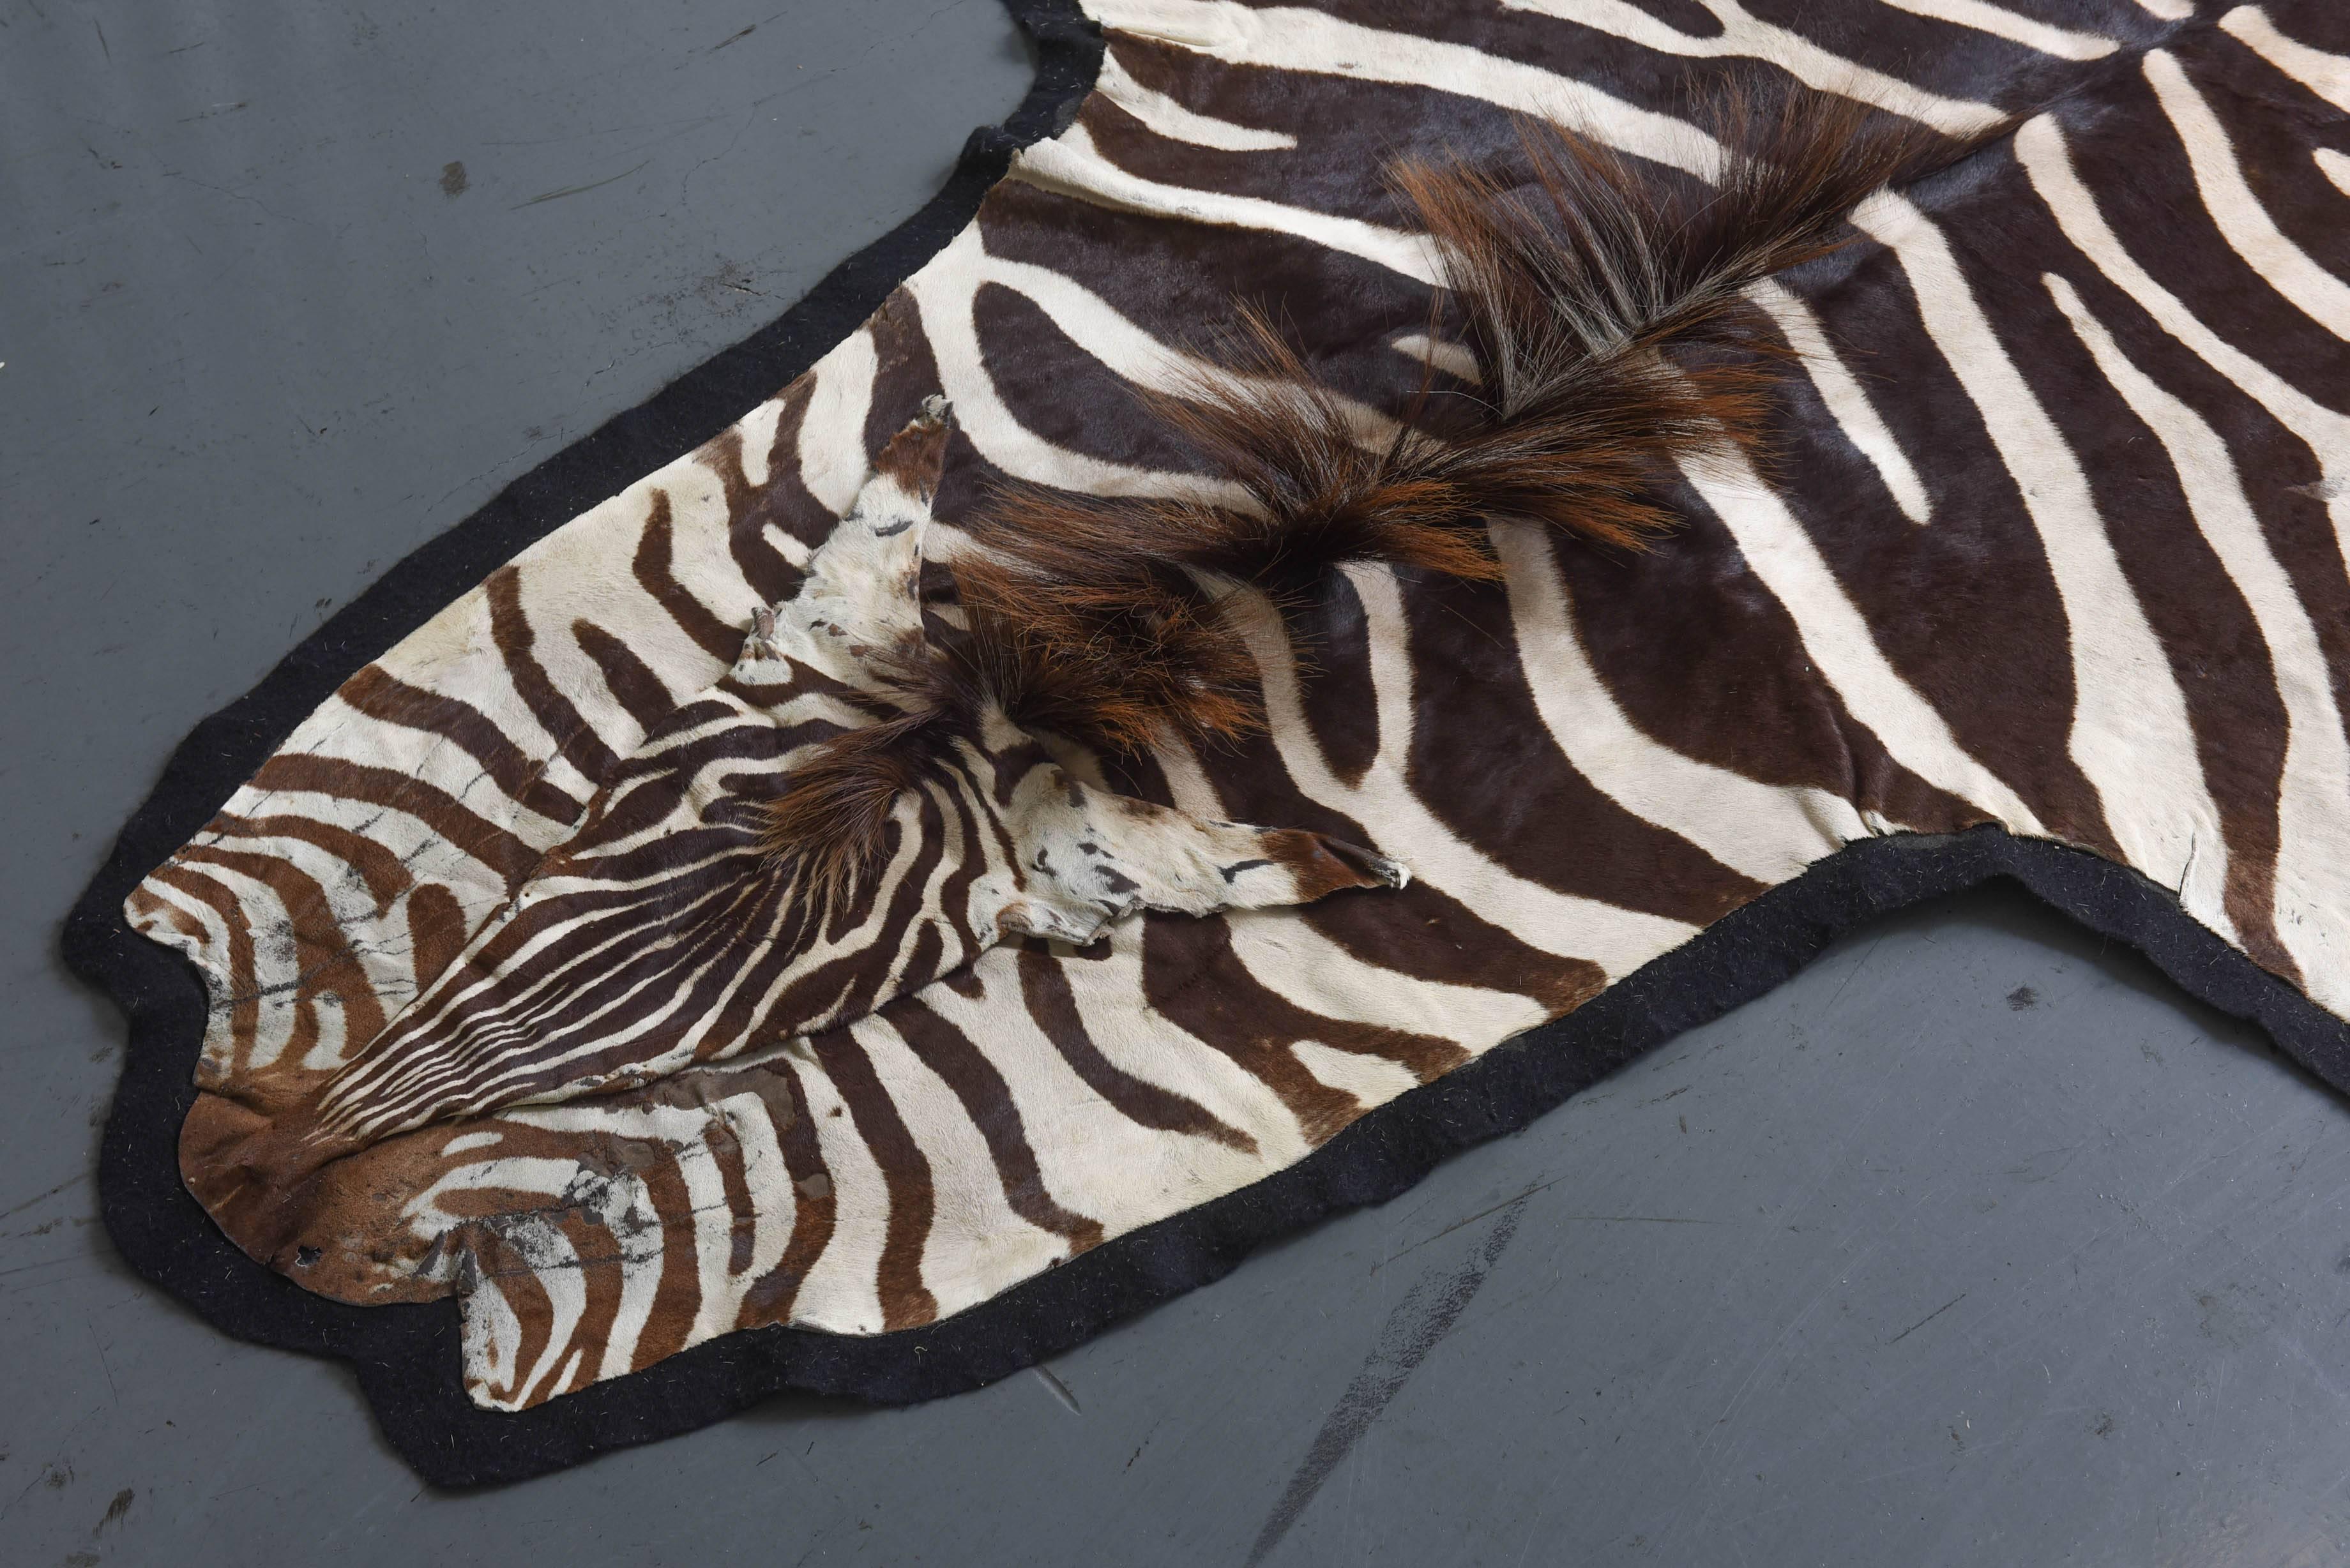 Very nice brown zebra skin rug with black felt backing.